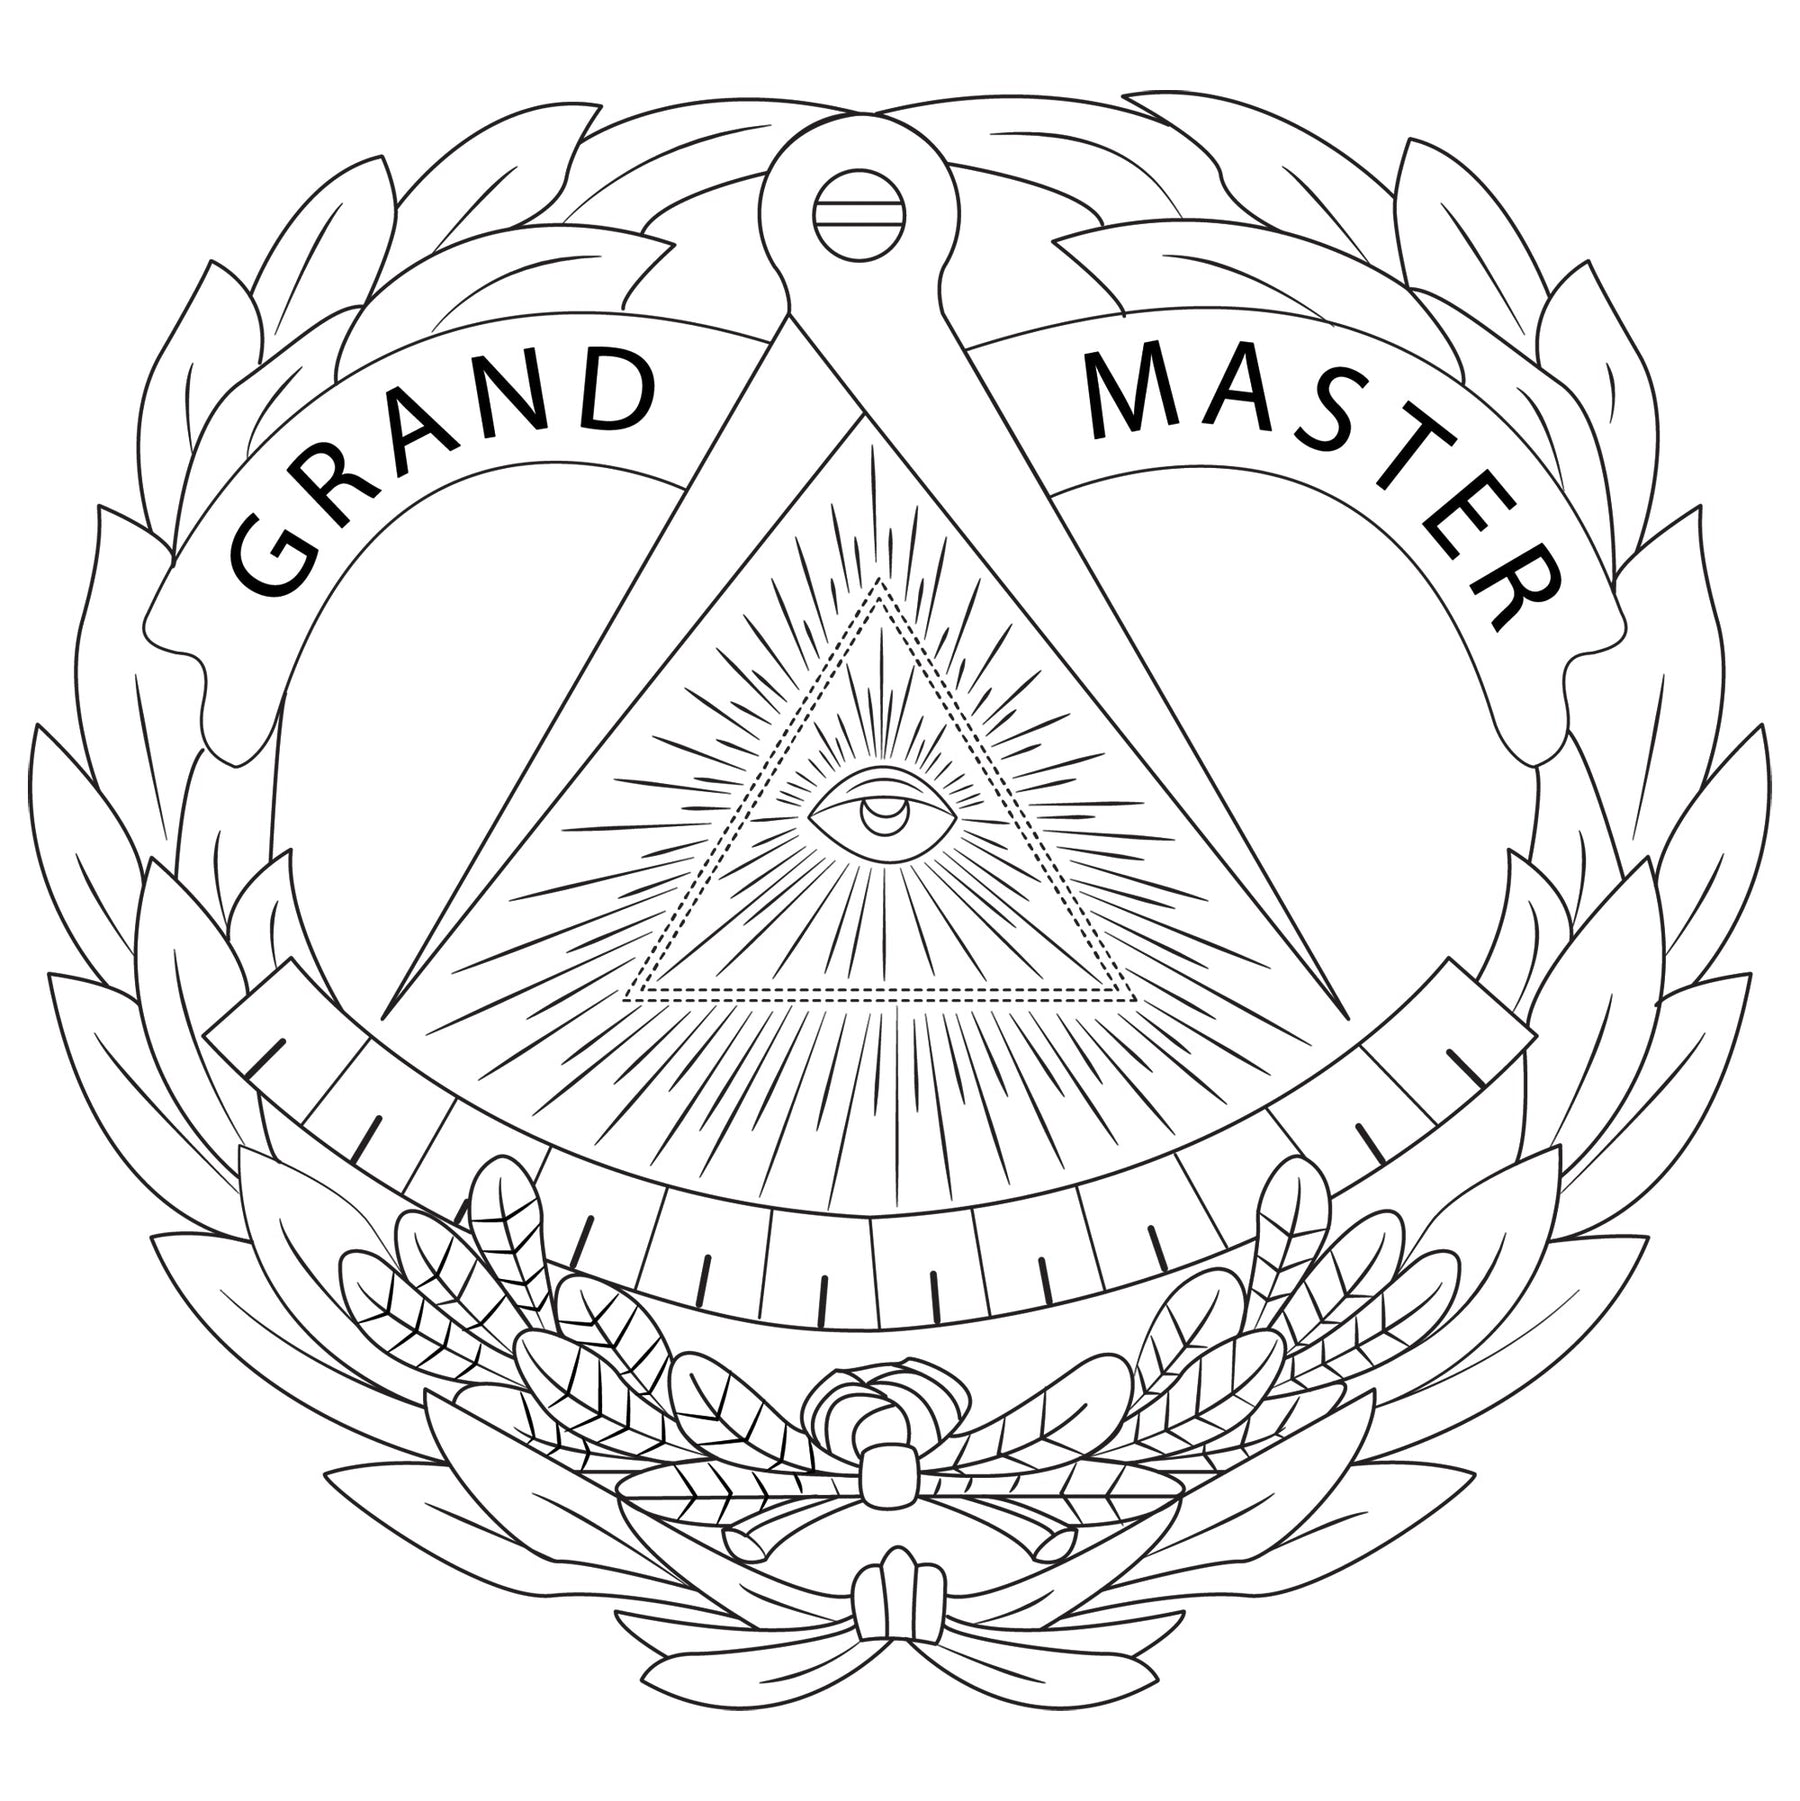 Grand Master Blue Lodge Pen Holder - Leather Brass - Bricks Masons